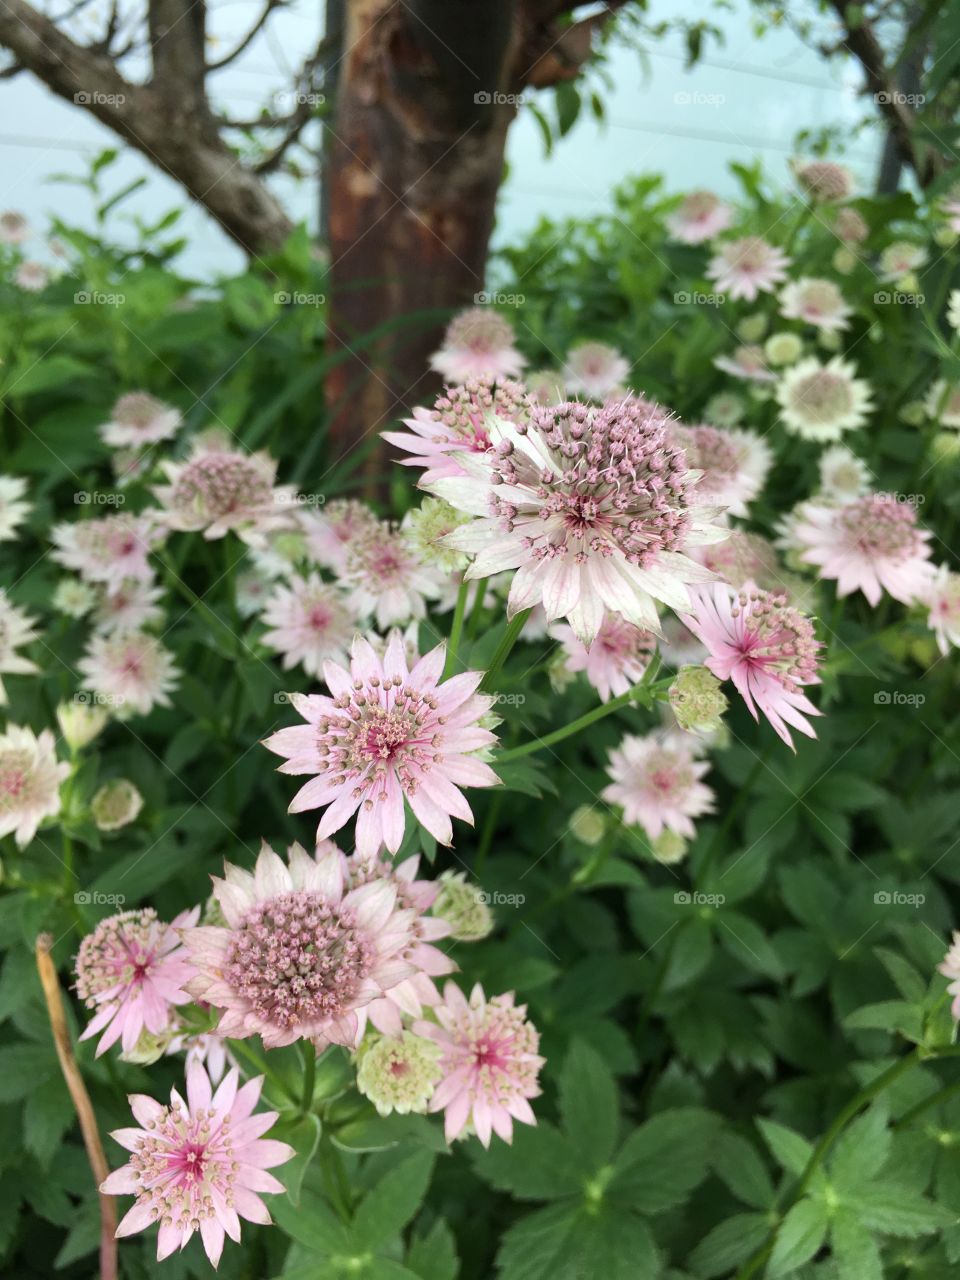 Astrantia flowers in bloom in Canada 